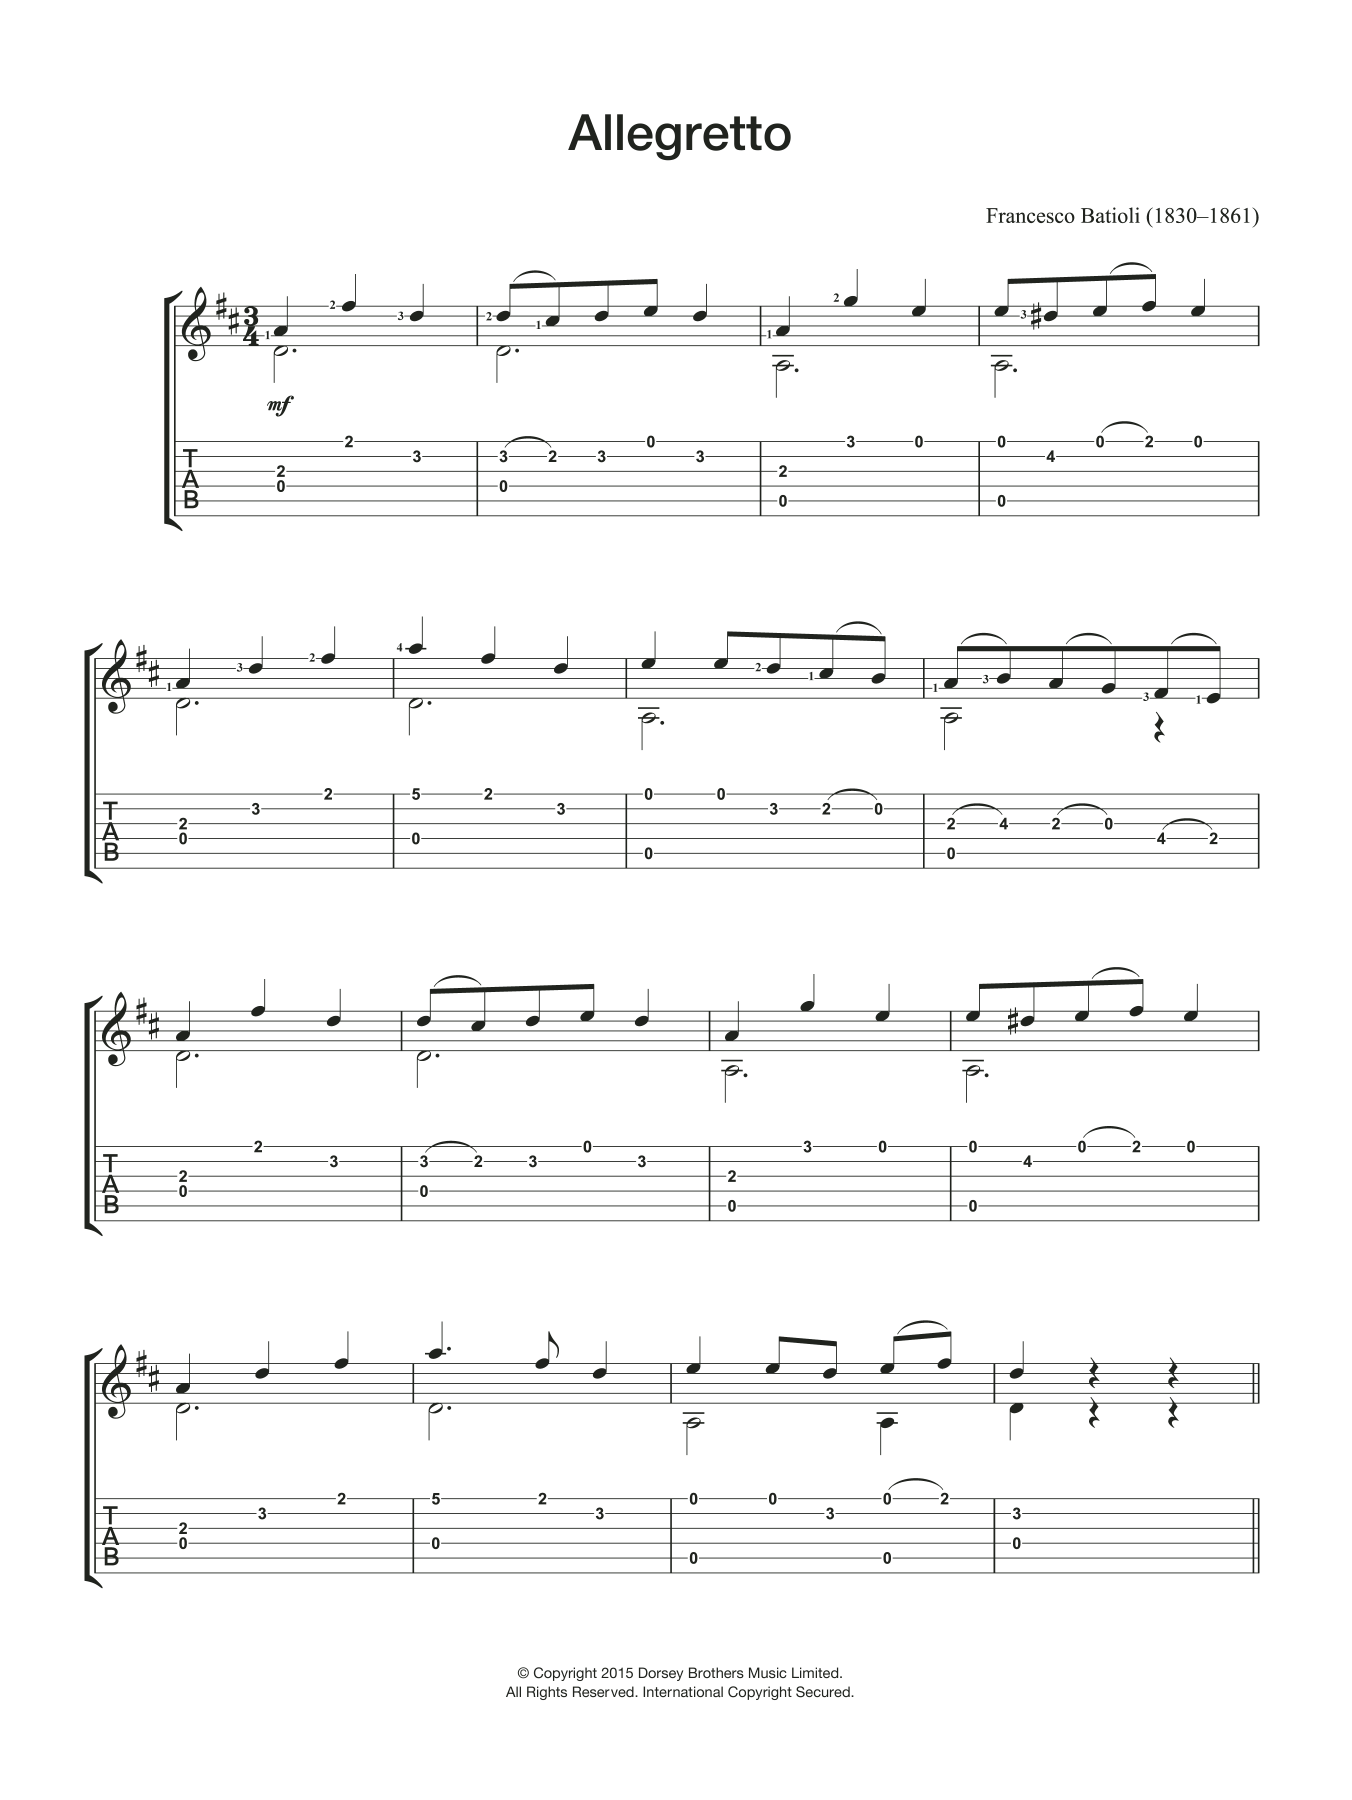 Francesco Batioli Allegretto Sheet Music Notes & Chords for Guitar - Download or Print PDF